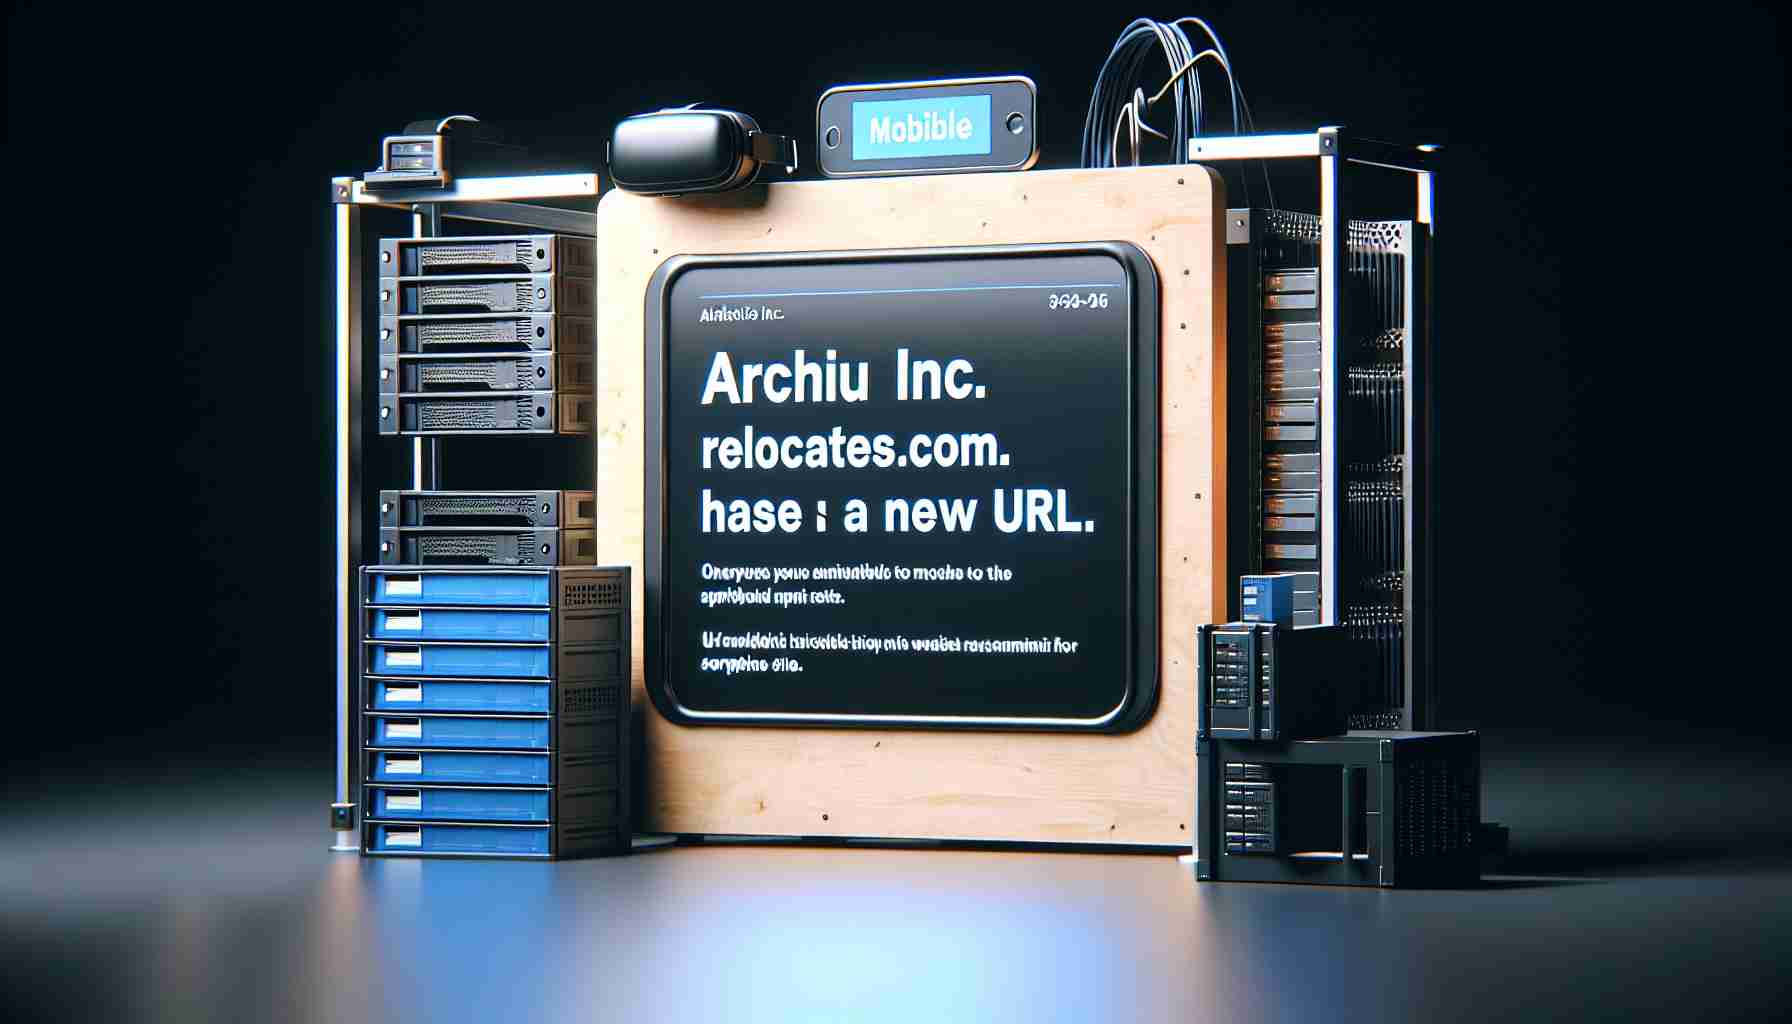 Archu Inc. Announces Relocation of its Smartphone Site “Mobile.com” to a New URL